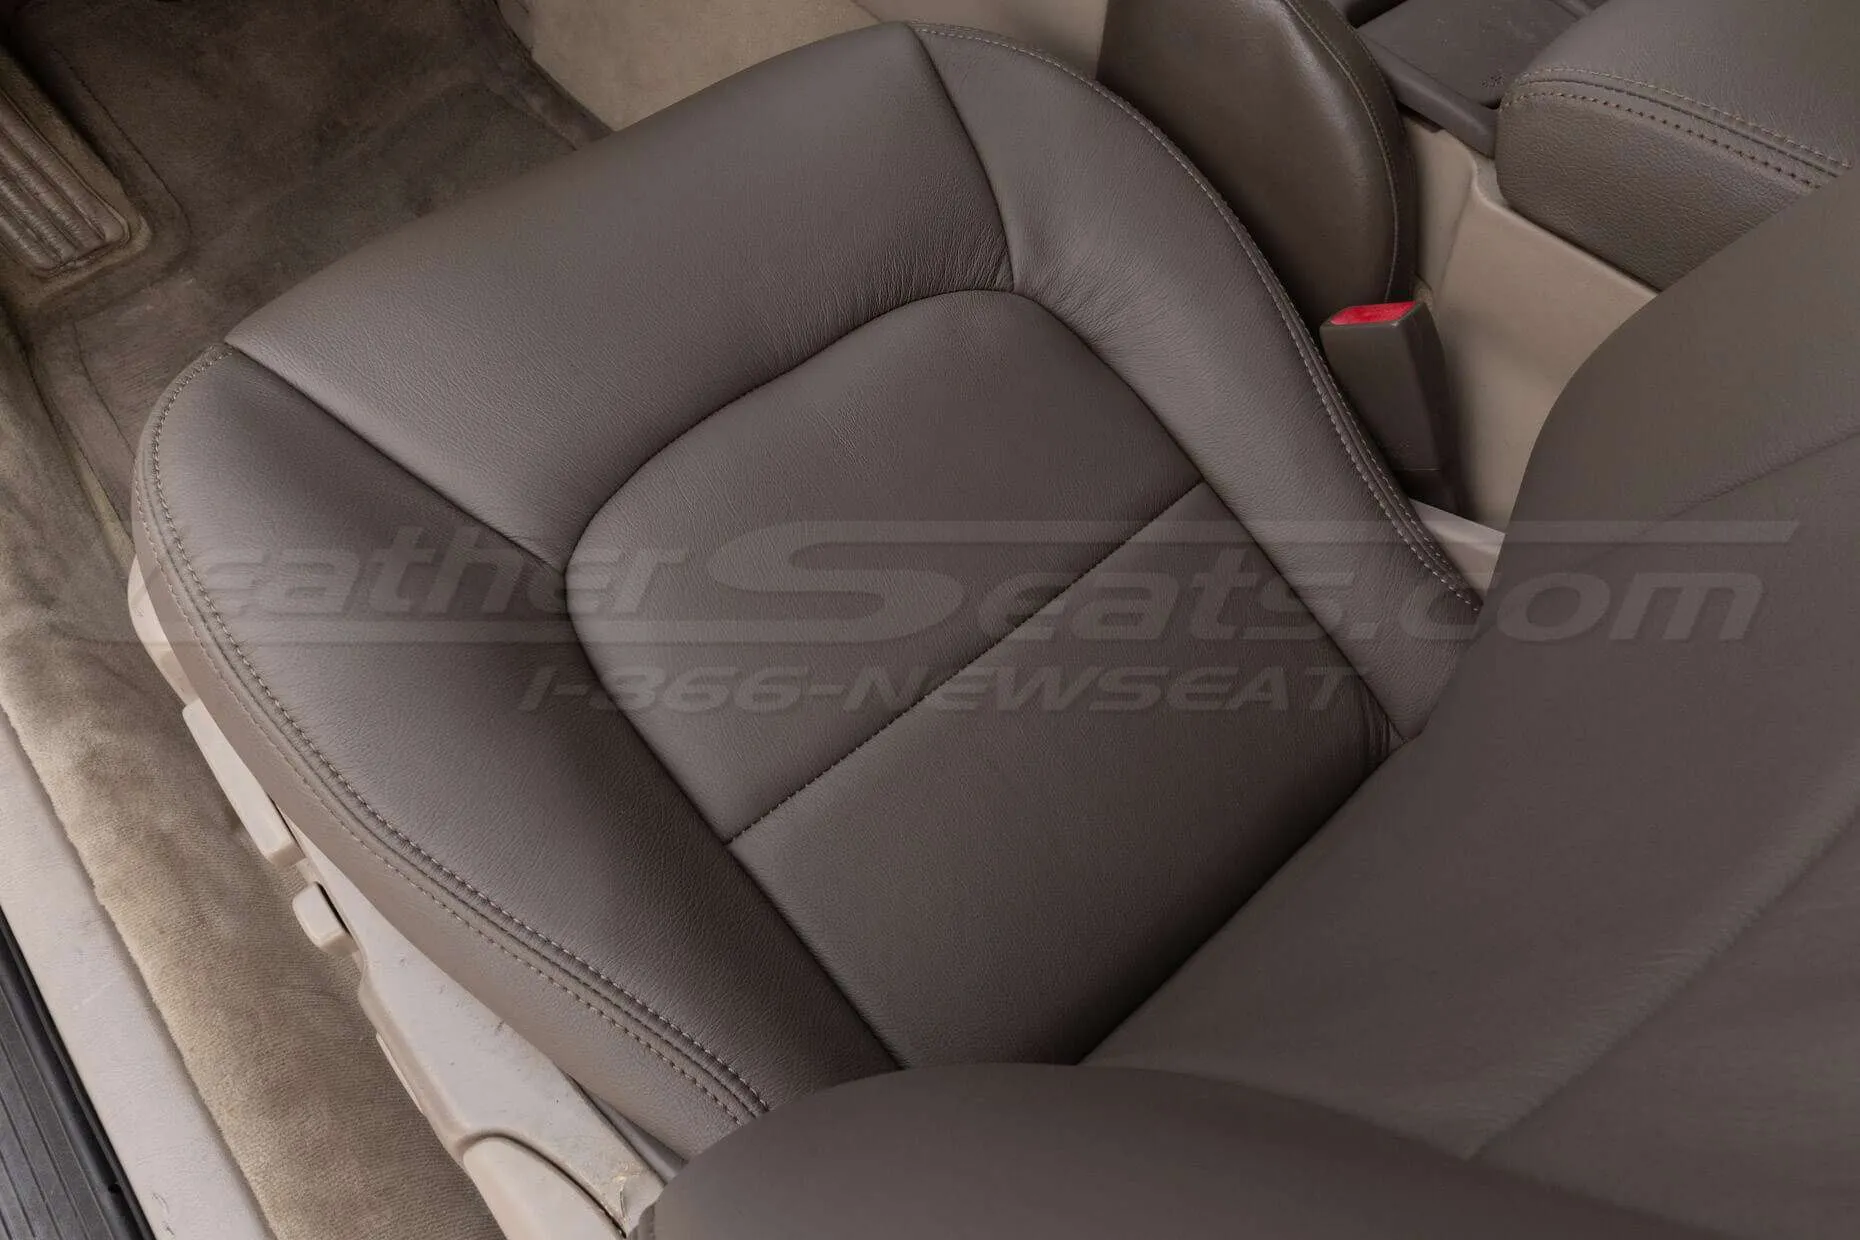 Lexus SC300/400 Leather Seats - Front driver's cushion